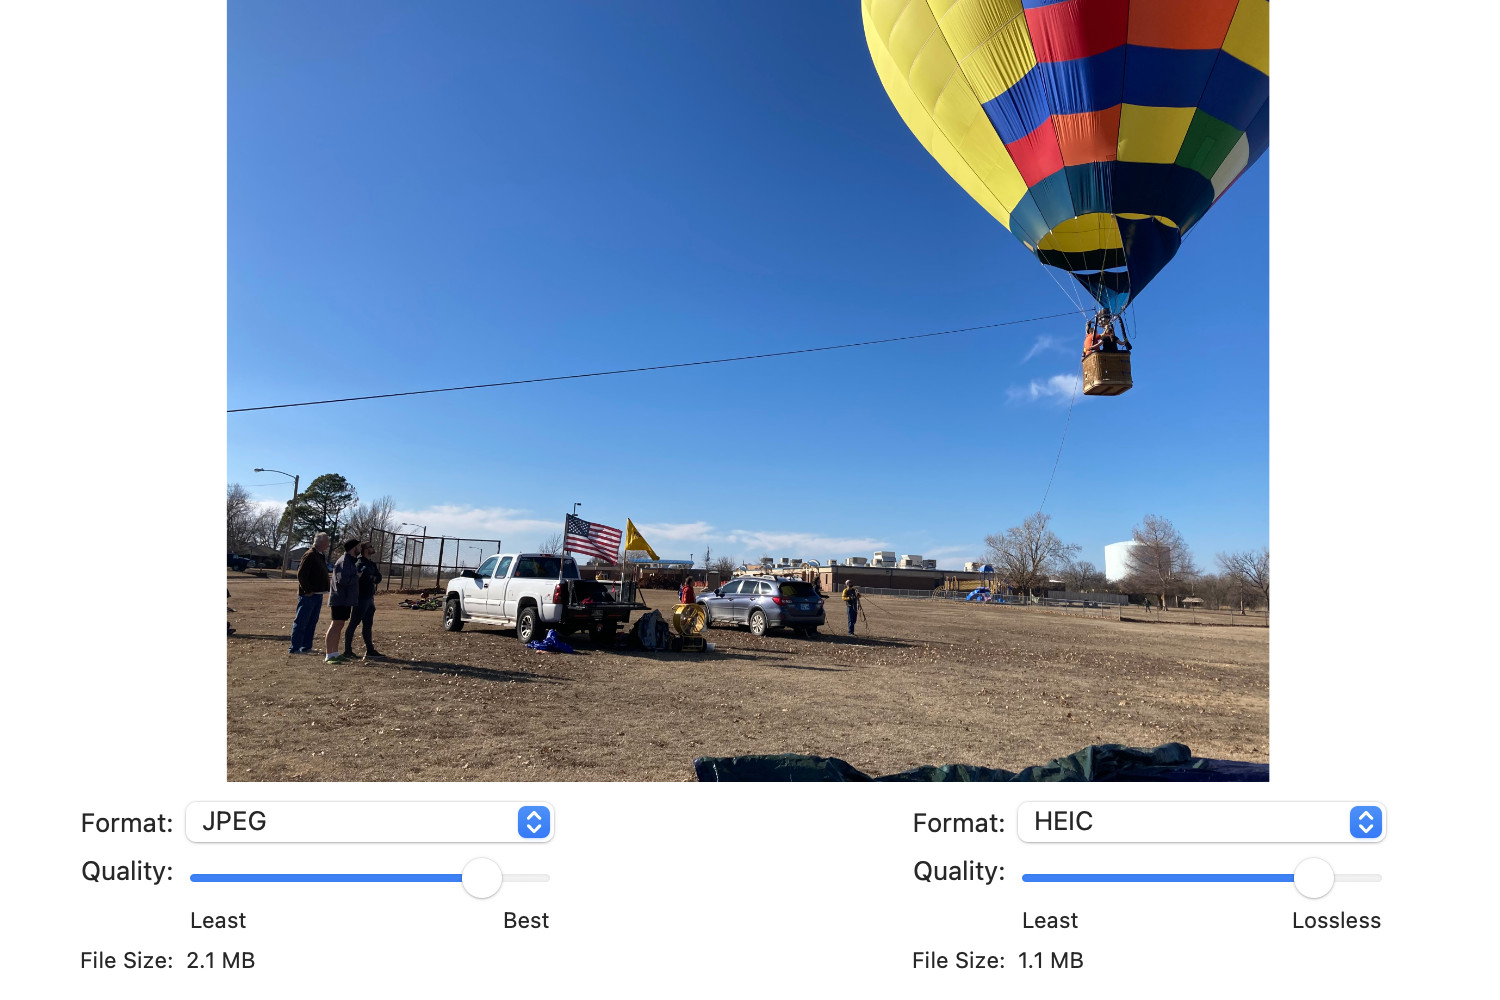 JPEG vs HEIC: An image of a hot air balloon launch.